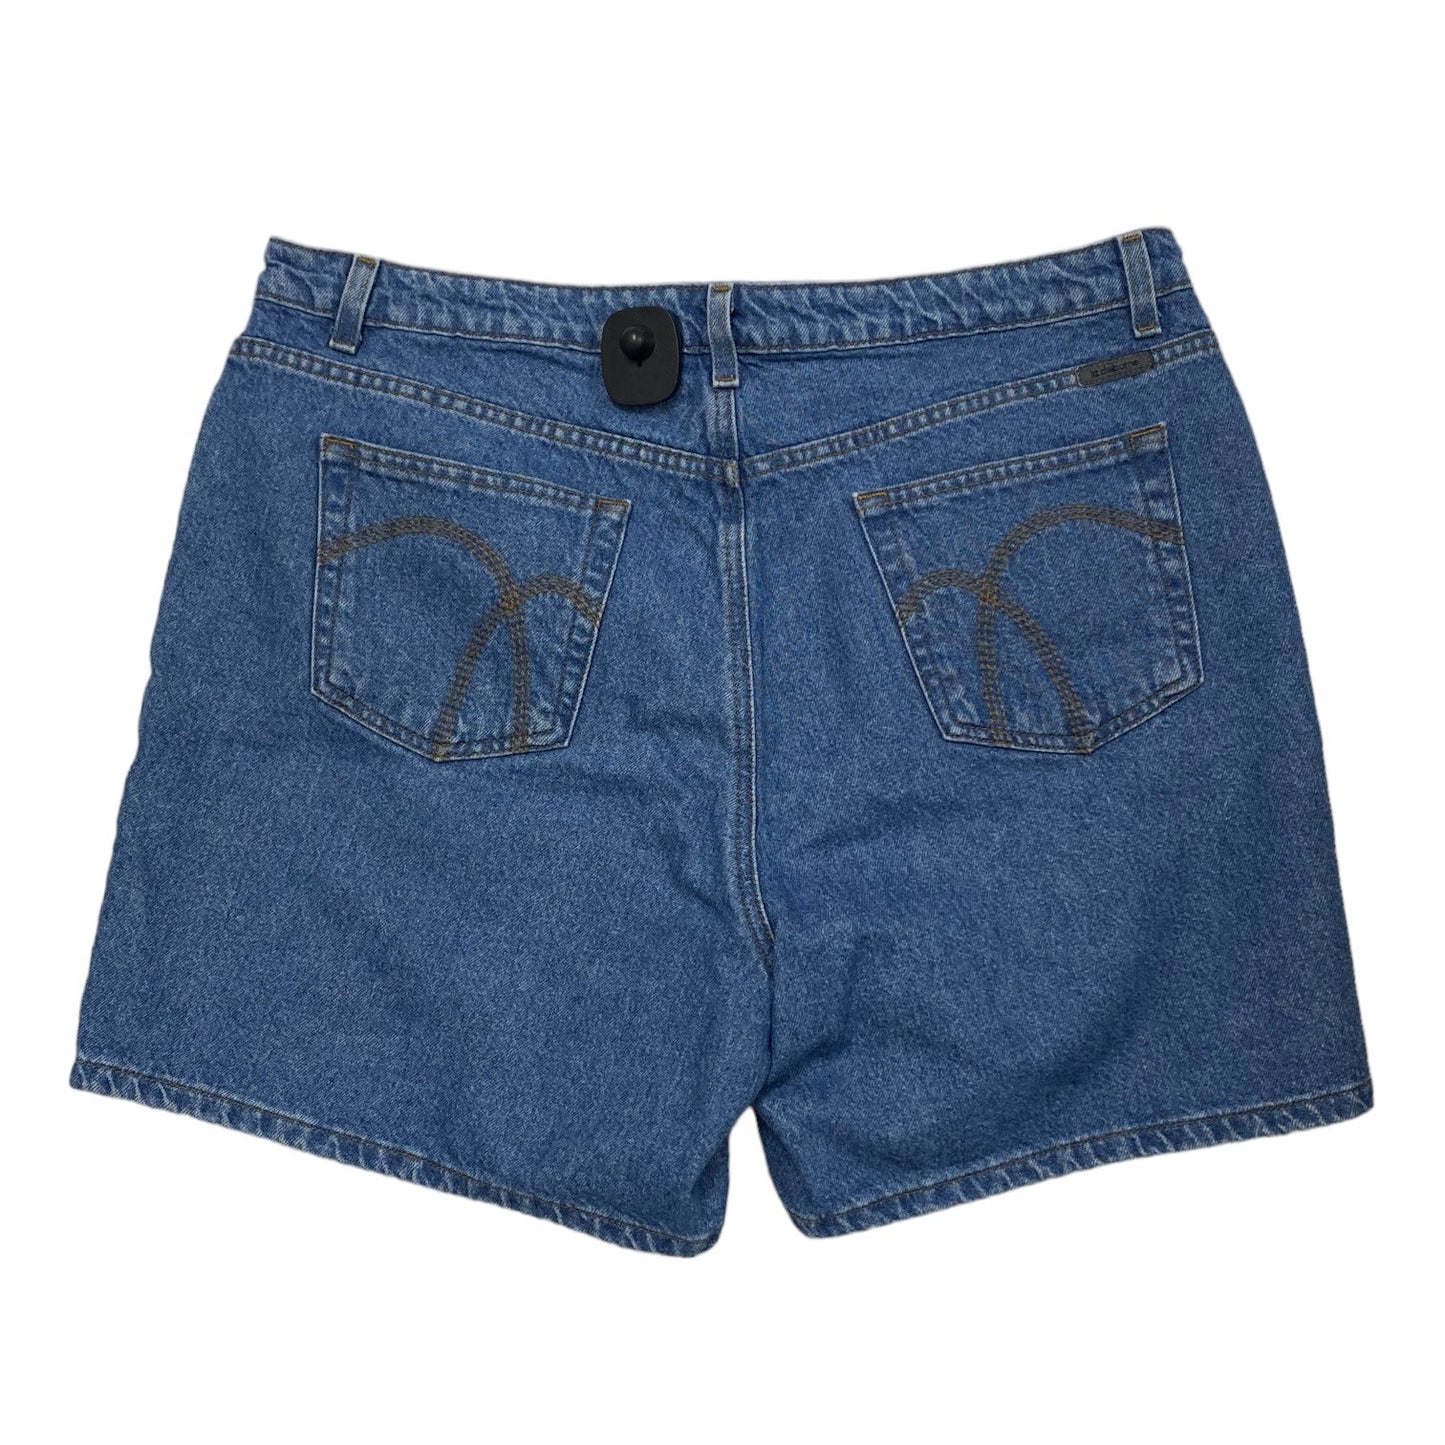 Blue Denim Shorts Liz Claiborne, Size 16